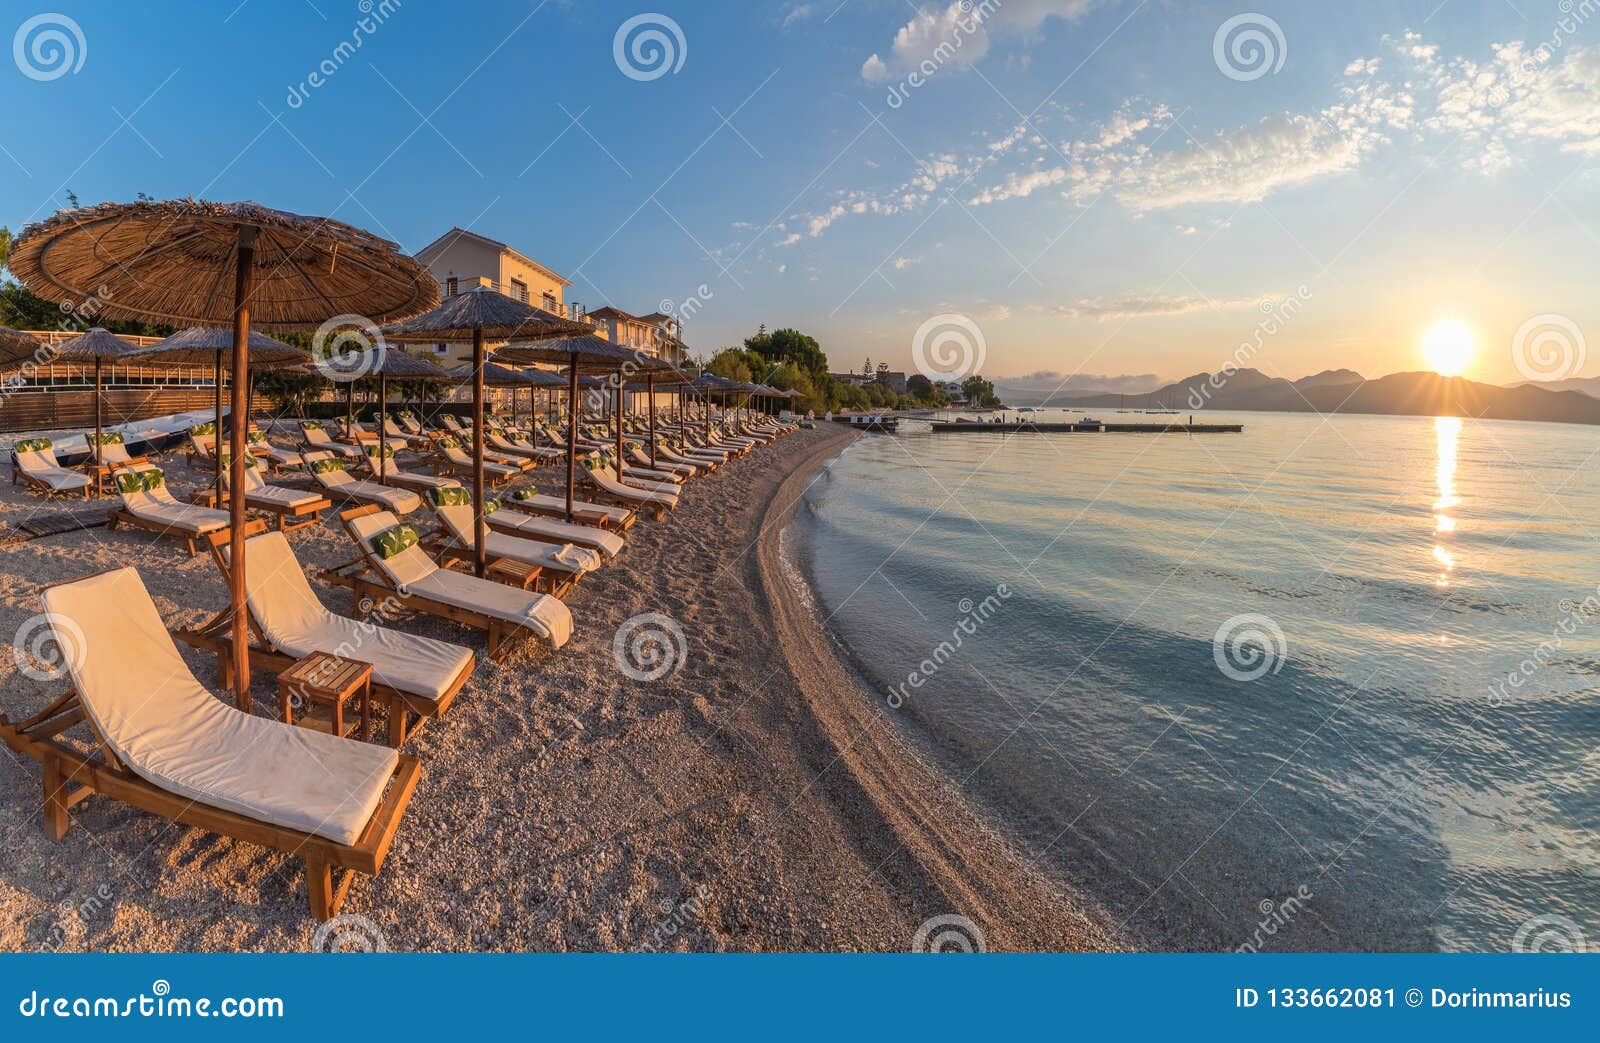 sunbeds and umbrella on the beach at sunset time, corfu island, greece